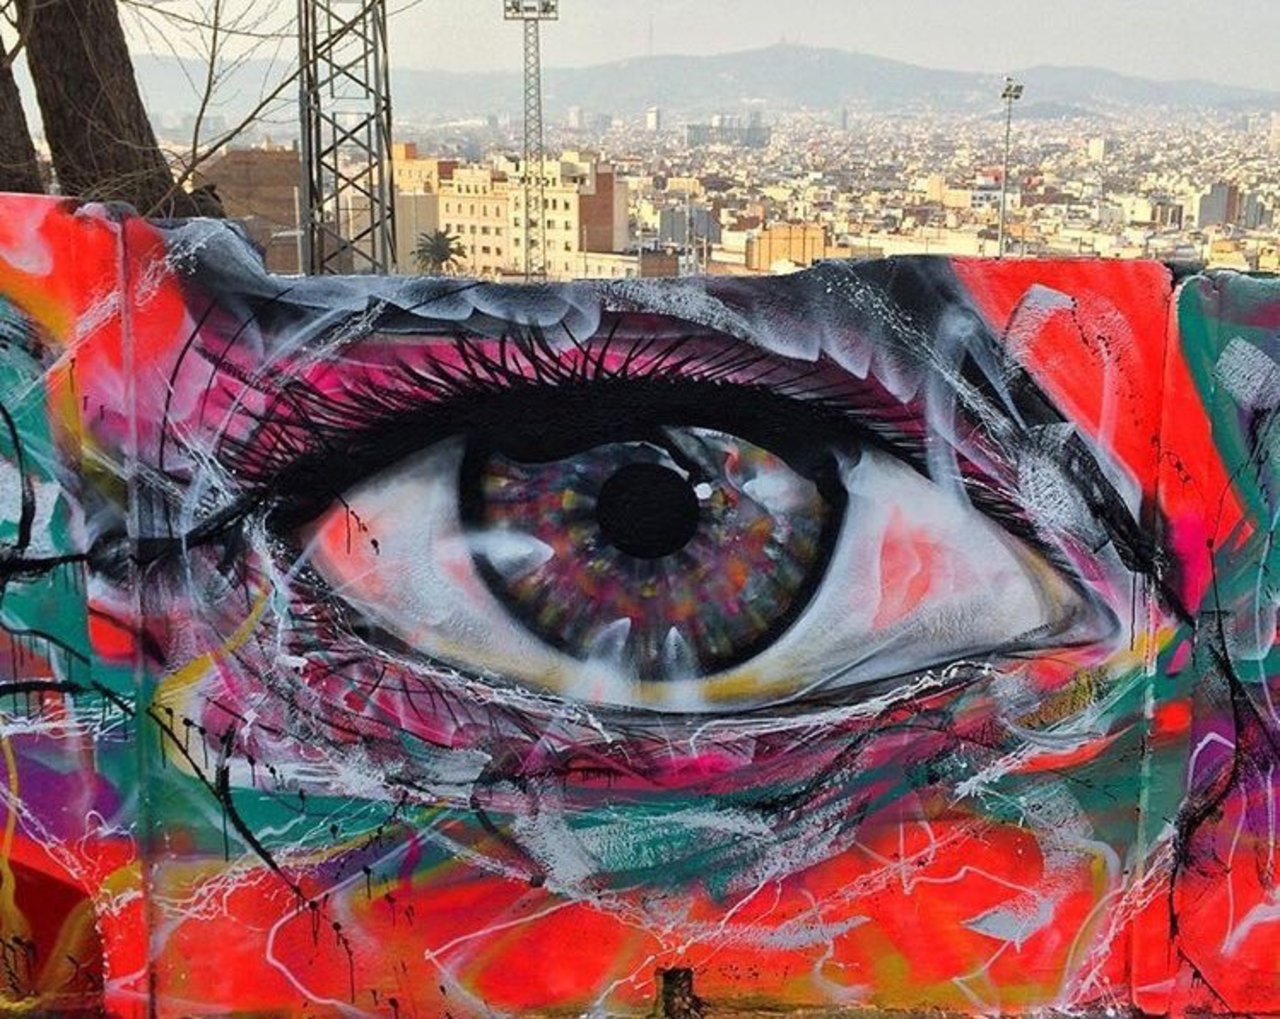 By L7m in Barcelona, Spain#art #graffiti #mural #streetart https://t.co/7LBST53qNH